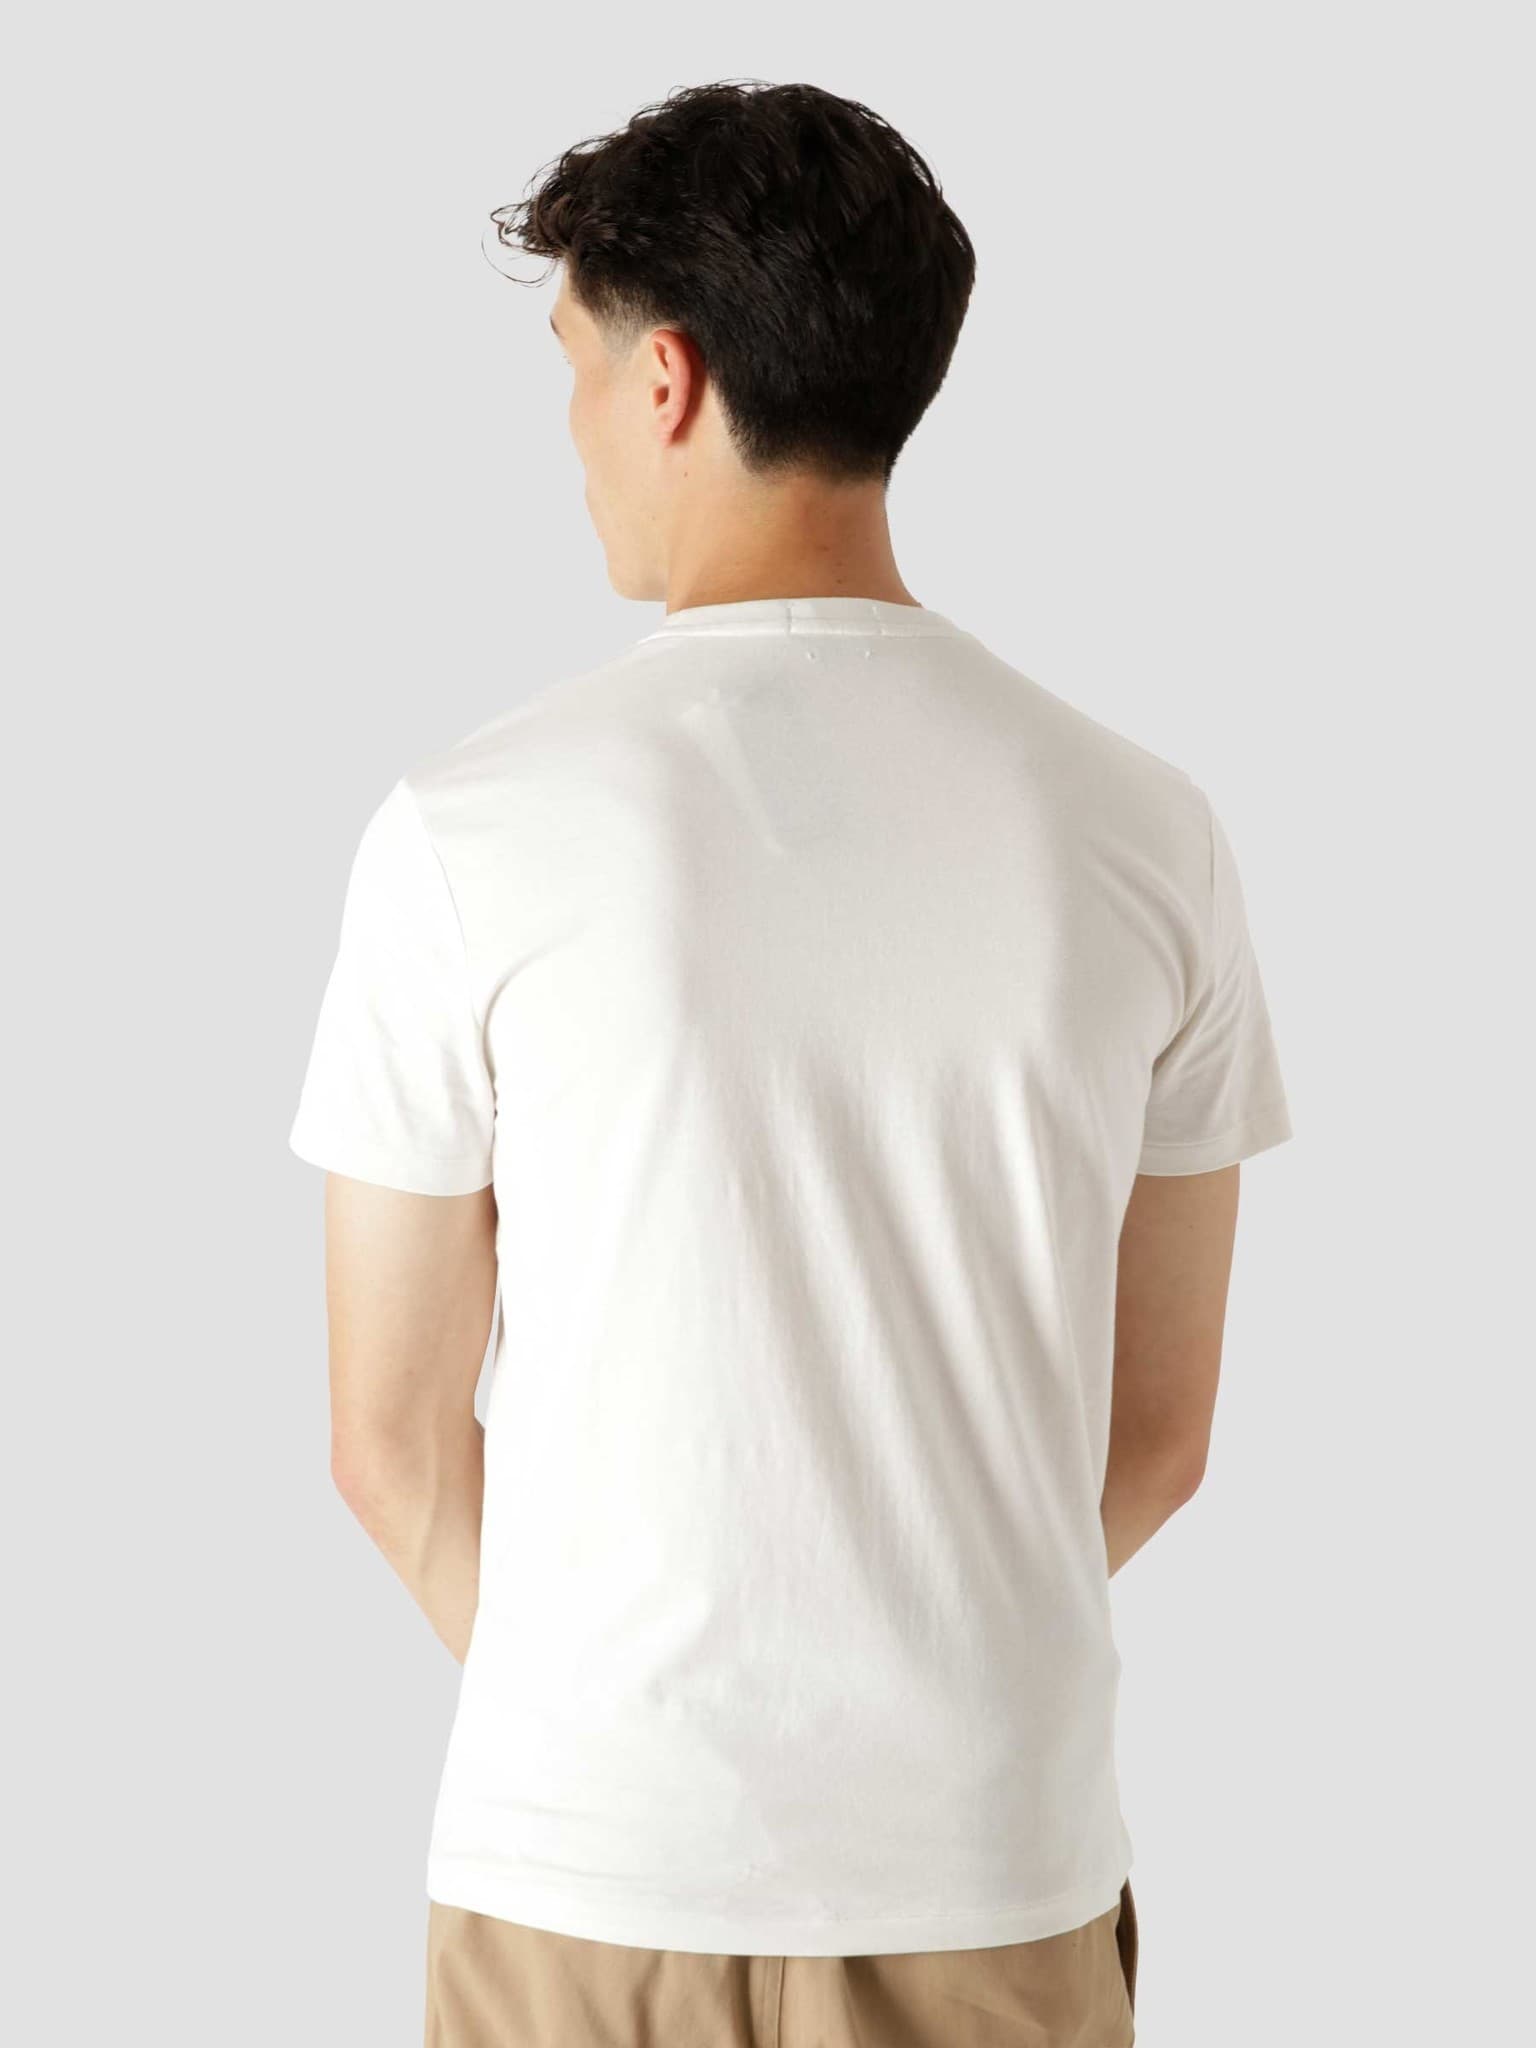 26-1 Jersey T-Shirt Deckwash White 710853265005